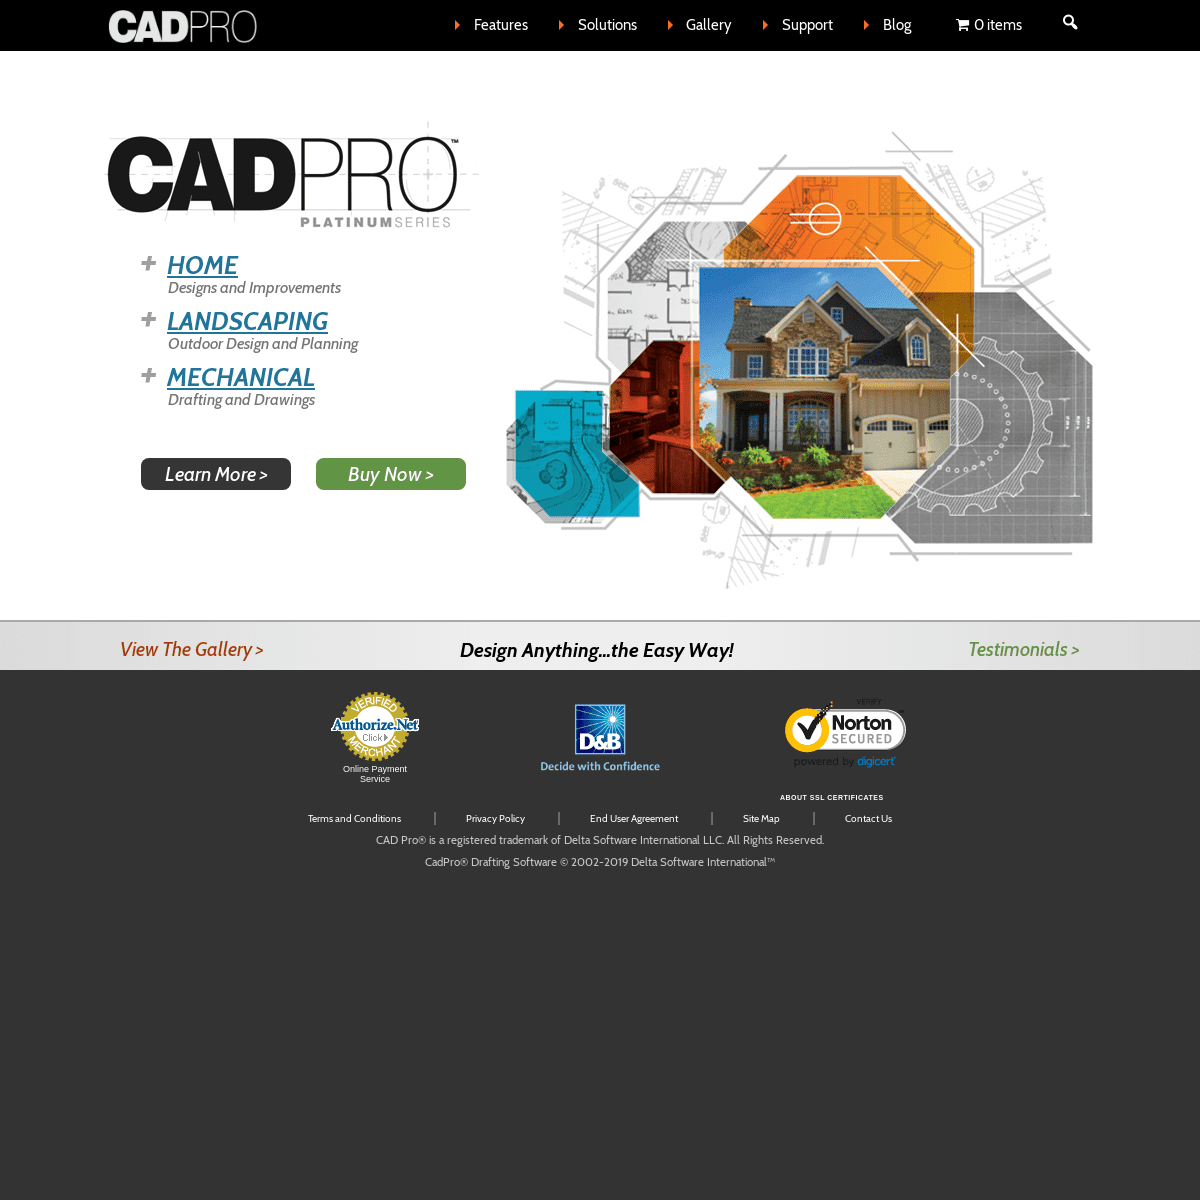 A complete backup of cadpro.com